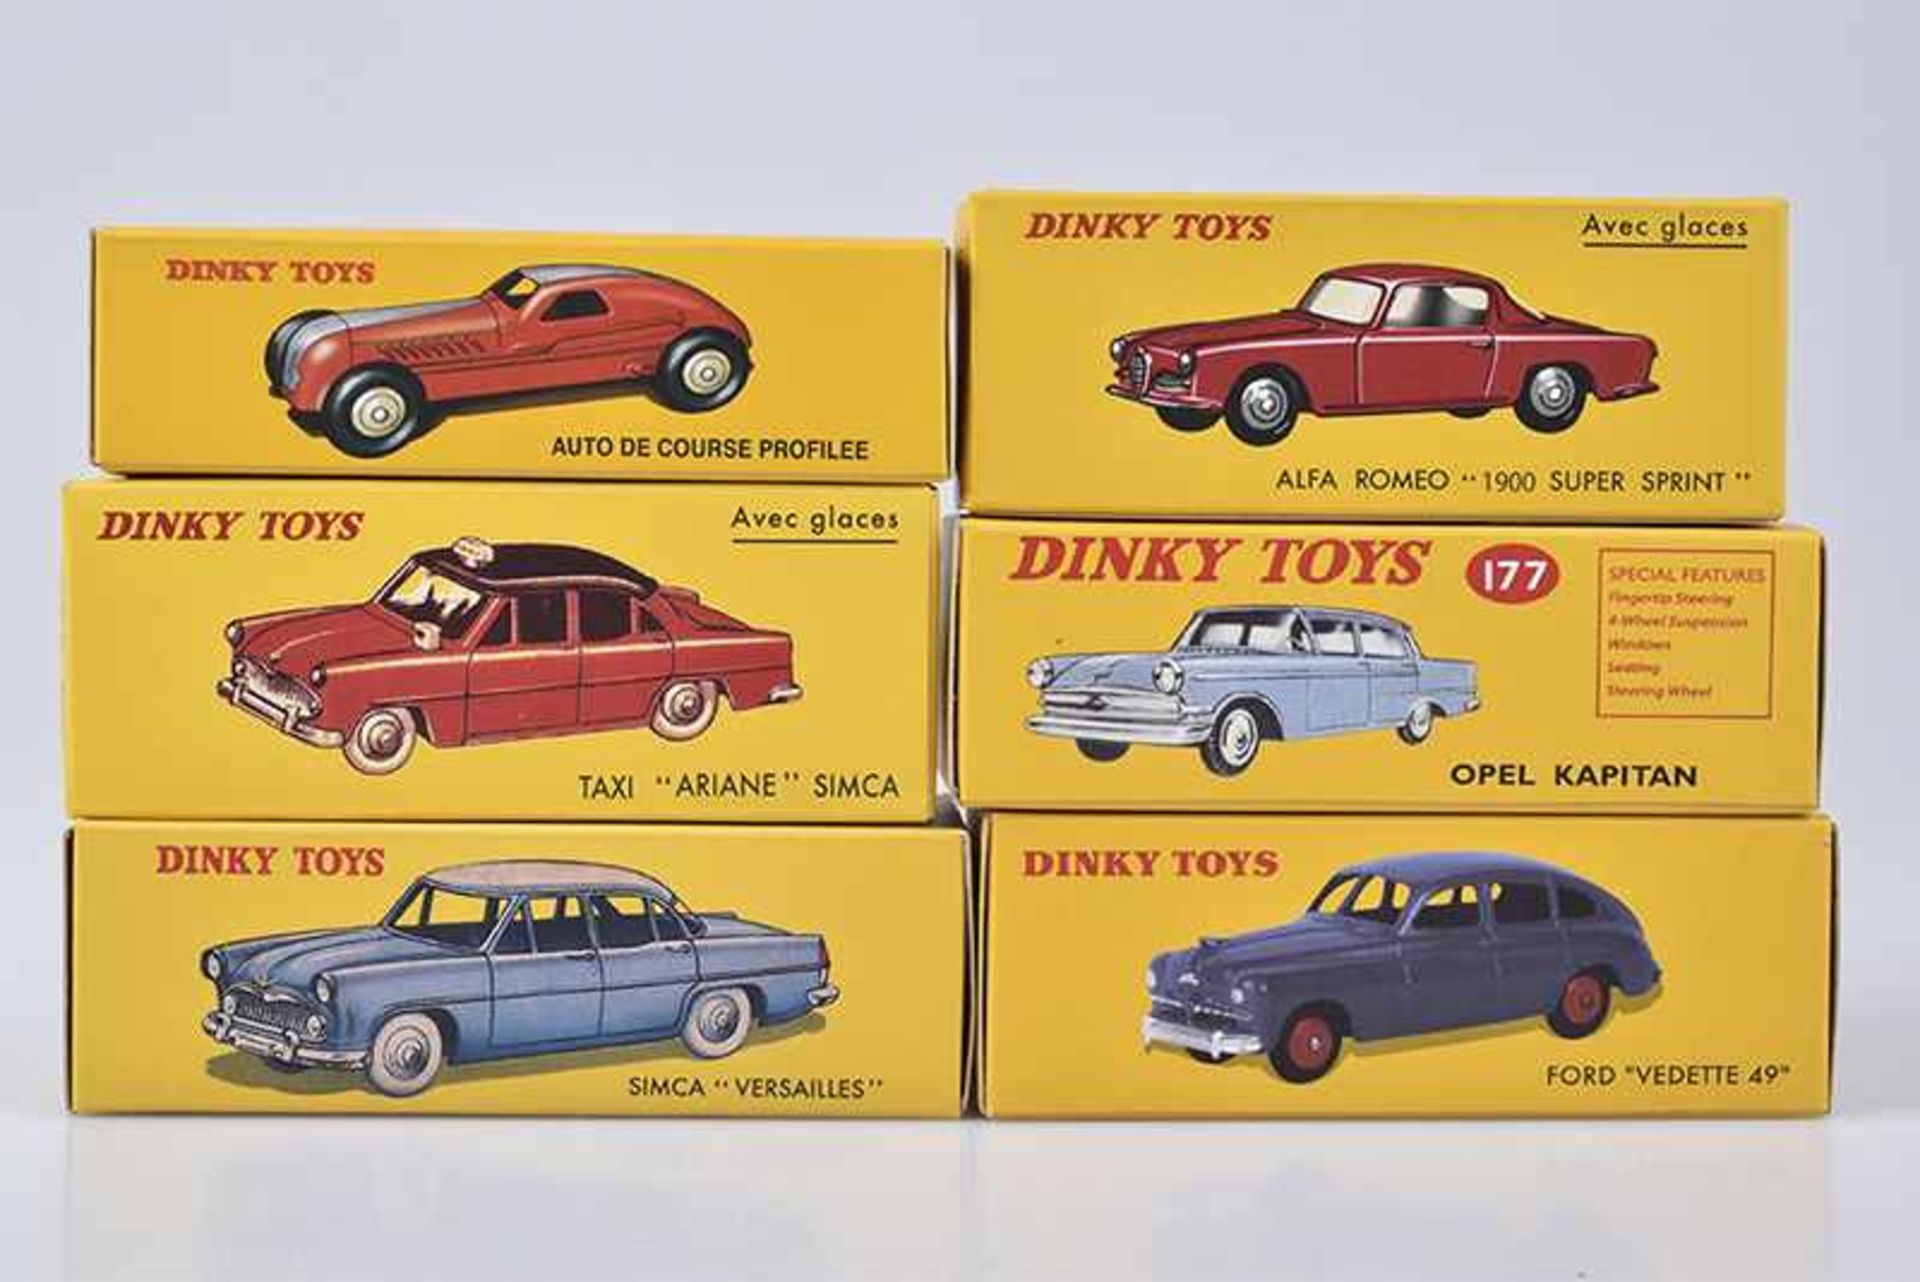 Konv. 6 DINKY TOYS Modellautos, Repliken, Editions ATLAS, M 1:43, Alfa Romeo "1900 Super Sprint",